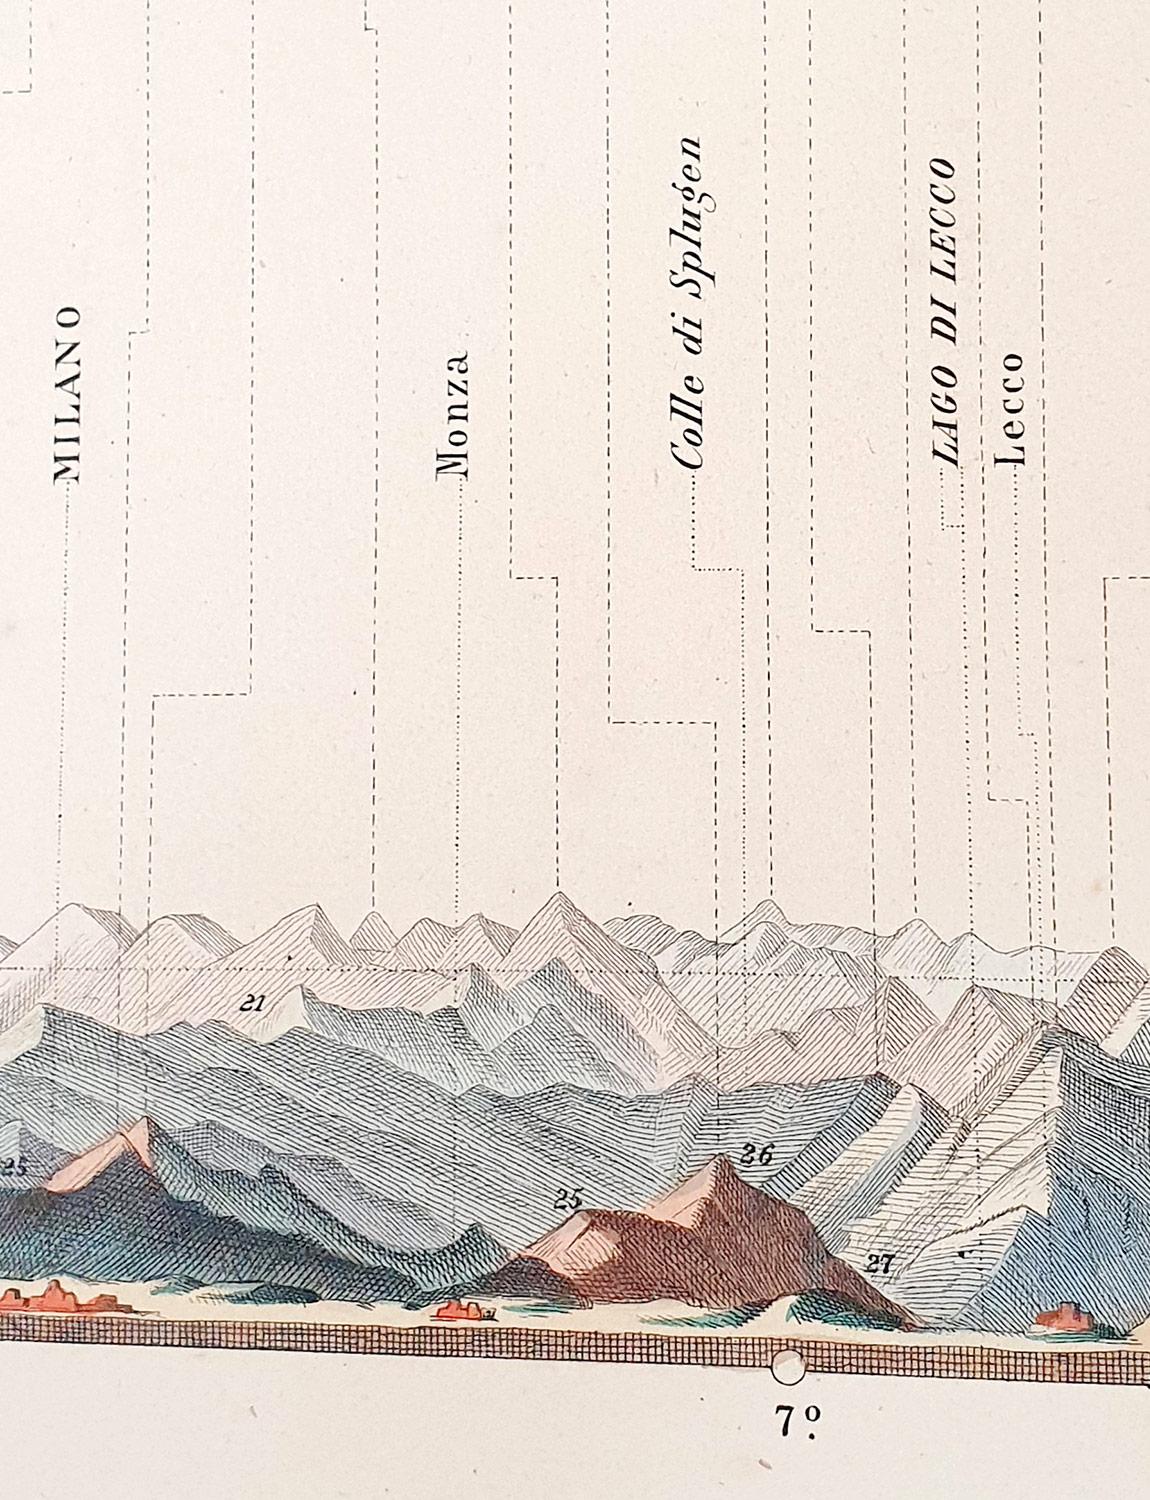 alpes italiennes carte